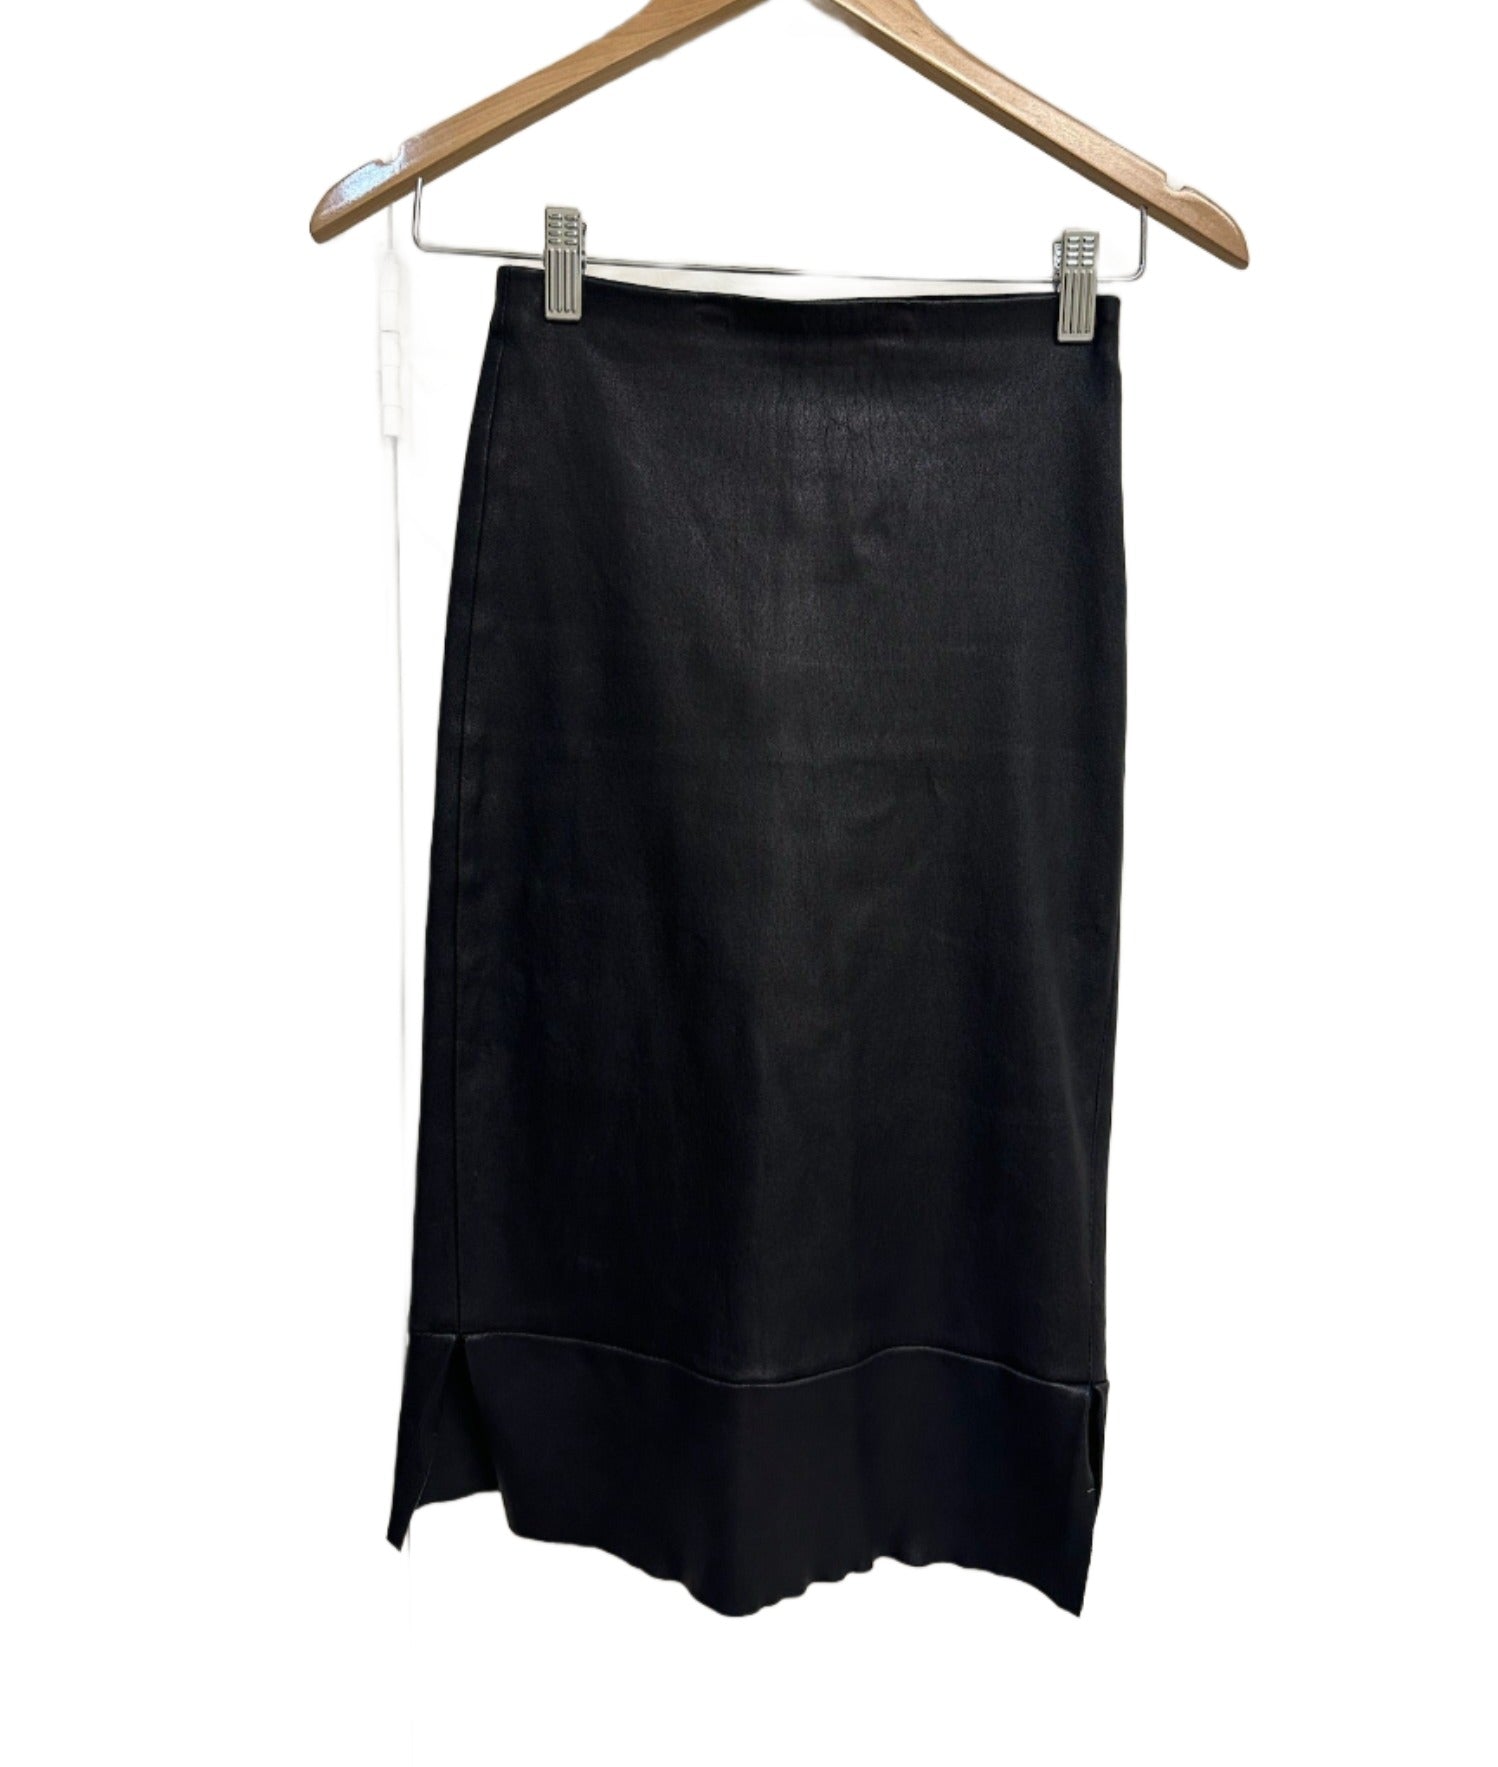 Scanlan Theodore Black Leather Skirt